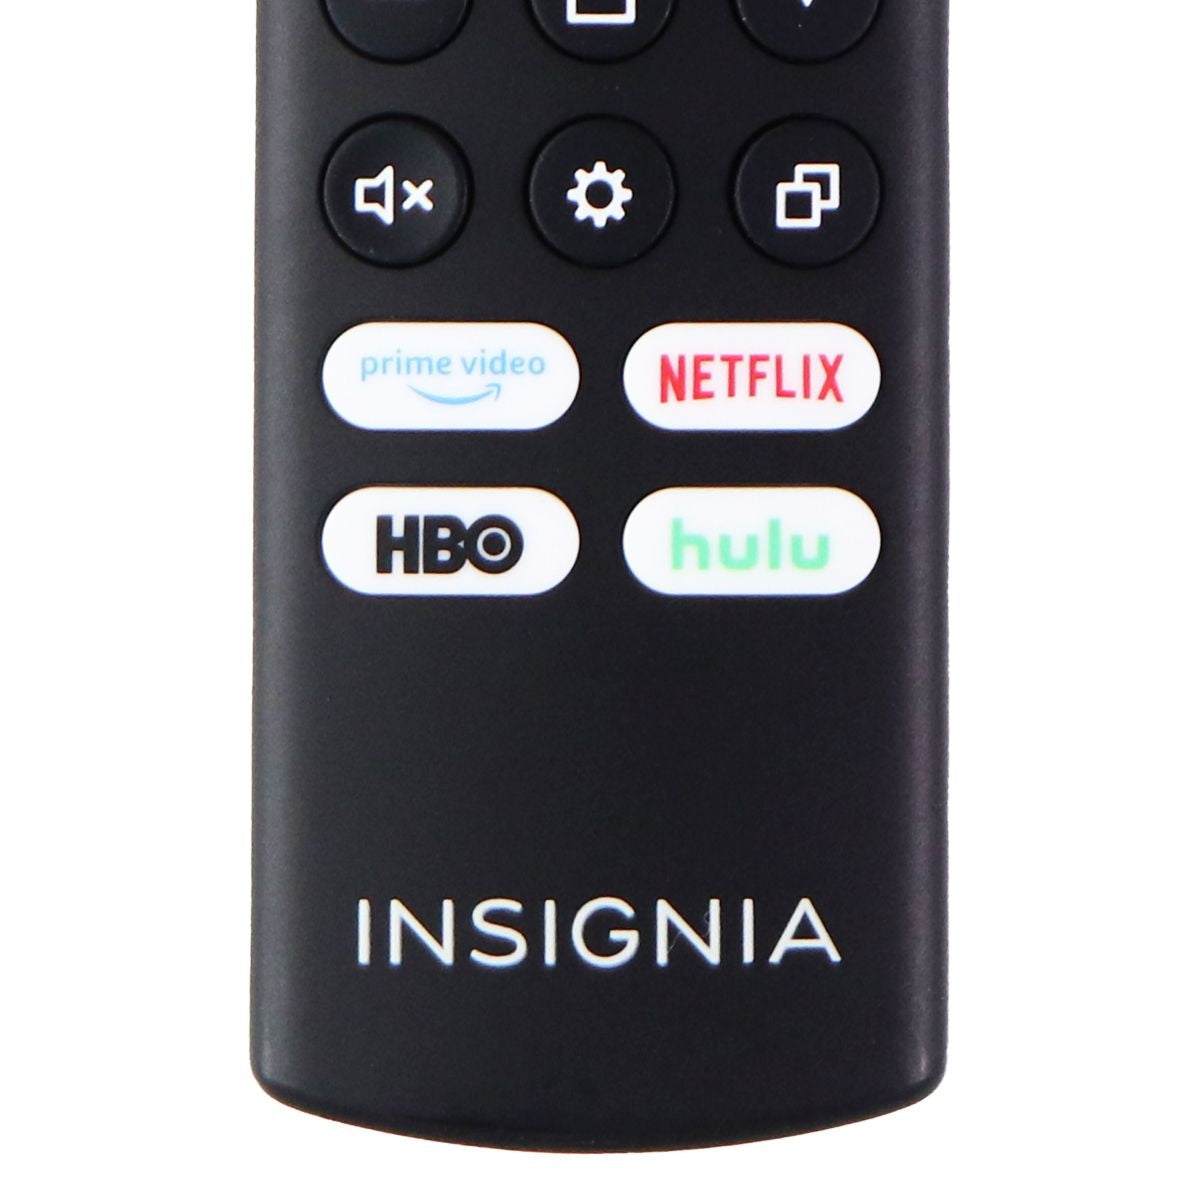 Insignia Remote Control (NS-RCFNA-21) for Insignia/Toshiba Fire TV - Black TV, Video & Audio Accessories - Remote Controls Insignia    - Simple Cell Bulk Wholesale Pricing - USA Seller